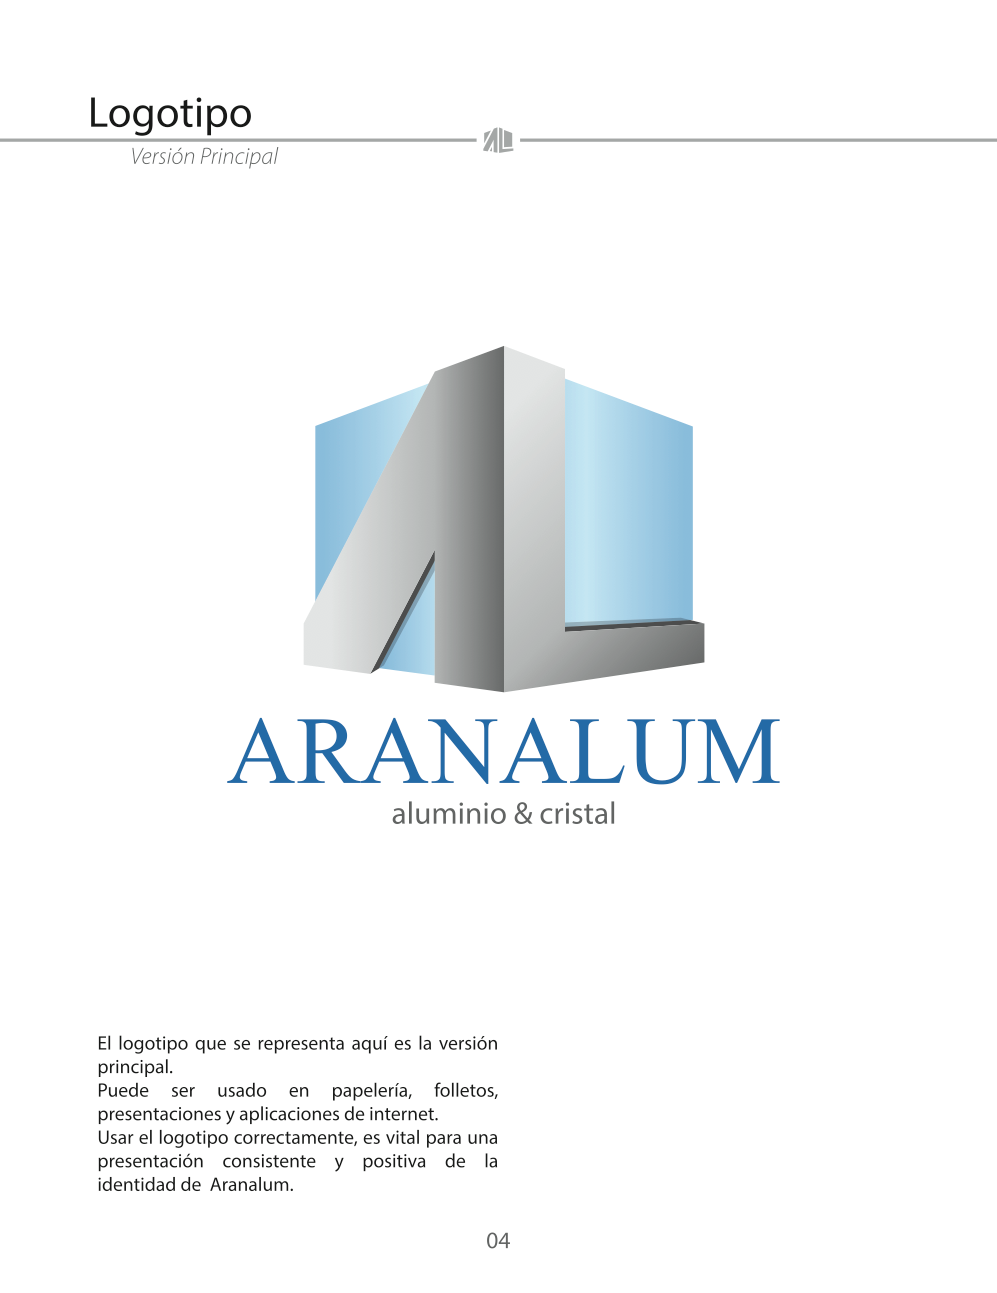 tepic  Nayarit  mexico Aranalum aluminio cristal glass casa creativa pitayon